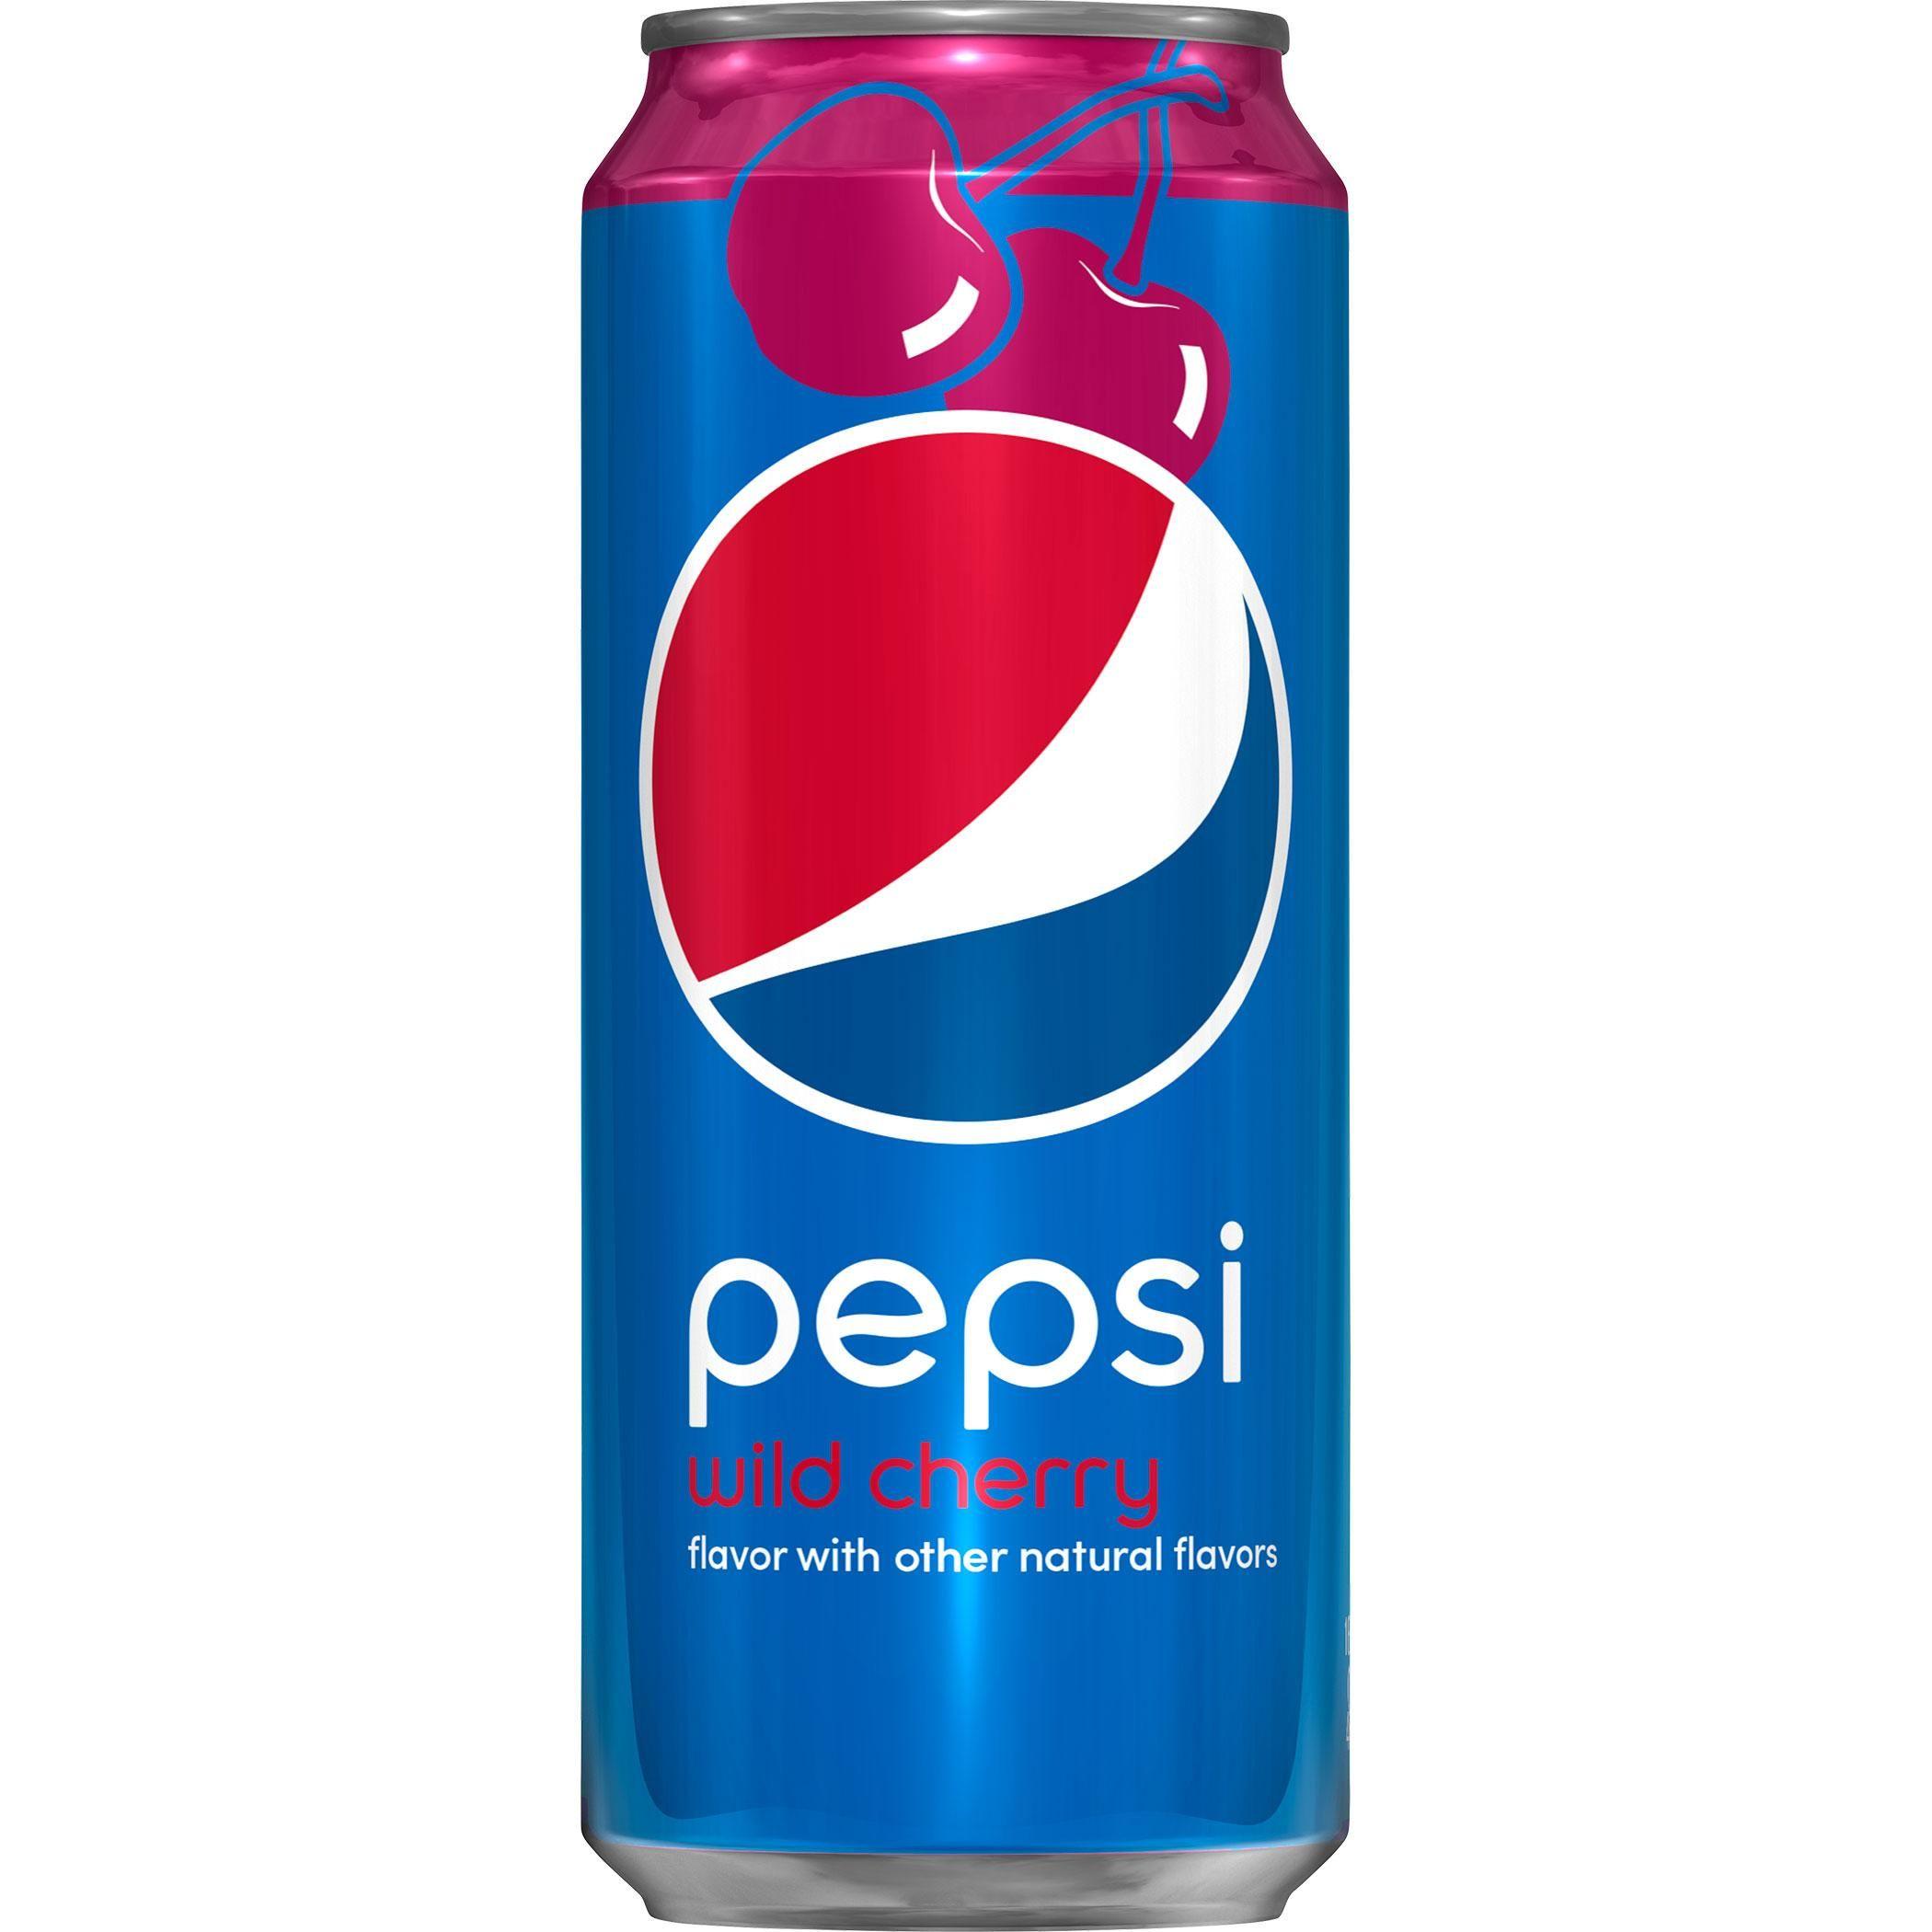 Wild Cherry Pepsi Logo - Amazon.com : Pepsi Wild Cherry 16 Ounce Cans, 12 Count : Grocery ...